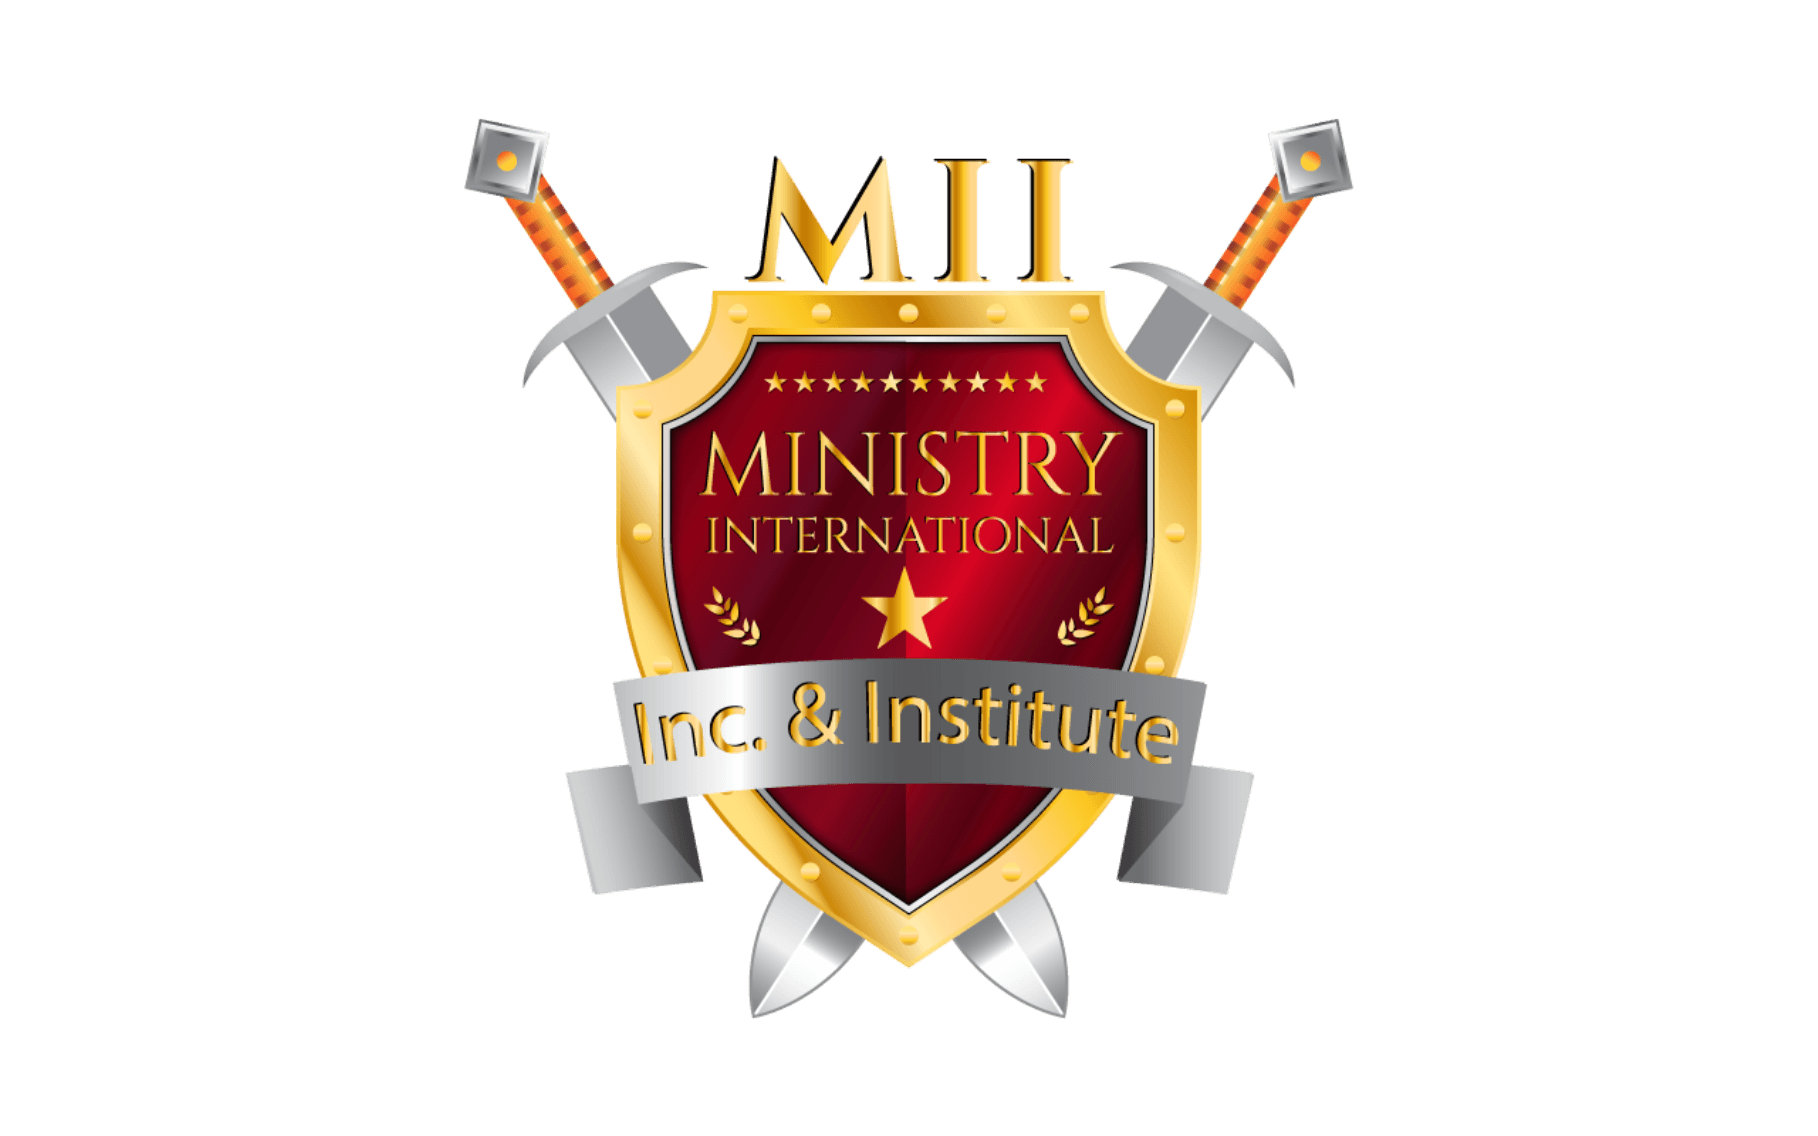 Mii Logo - Ministry International Inc.